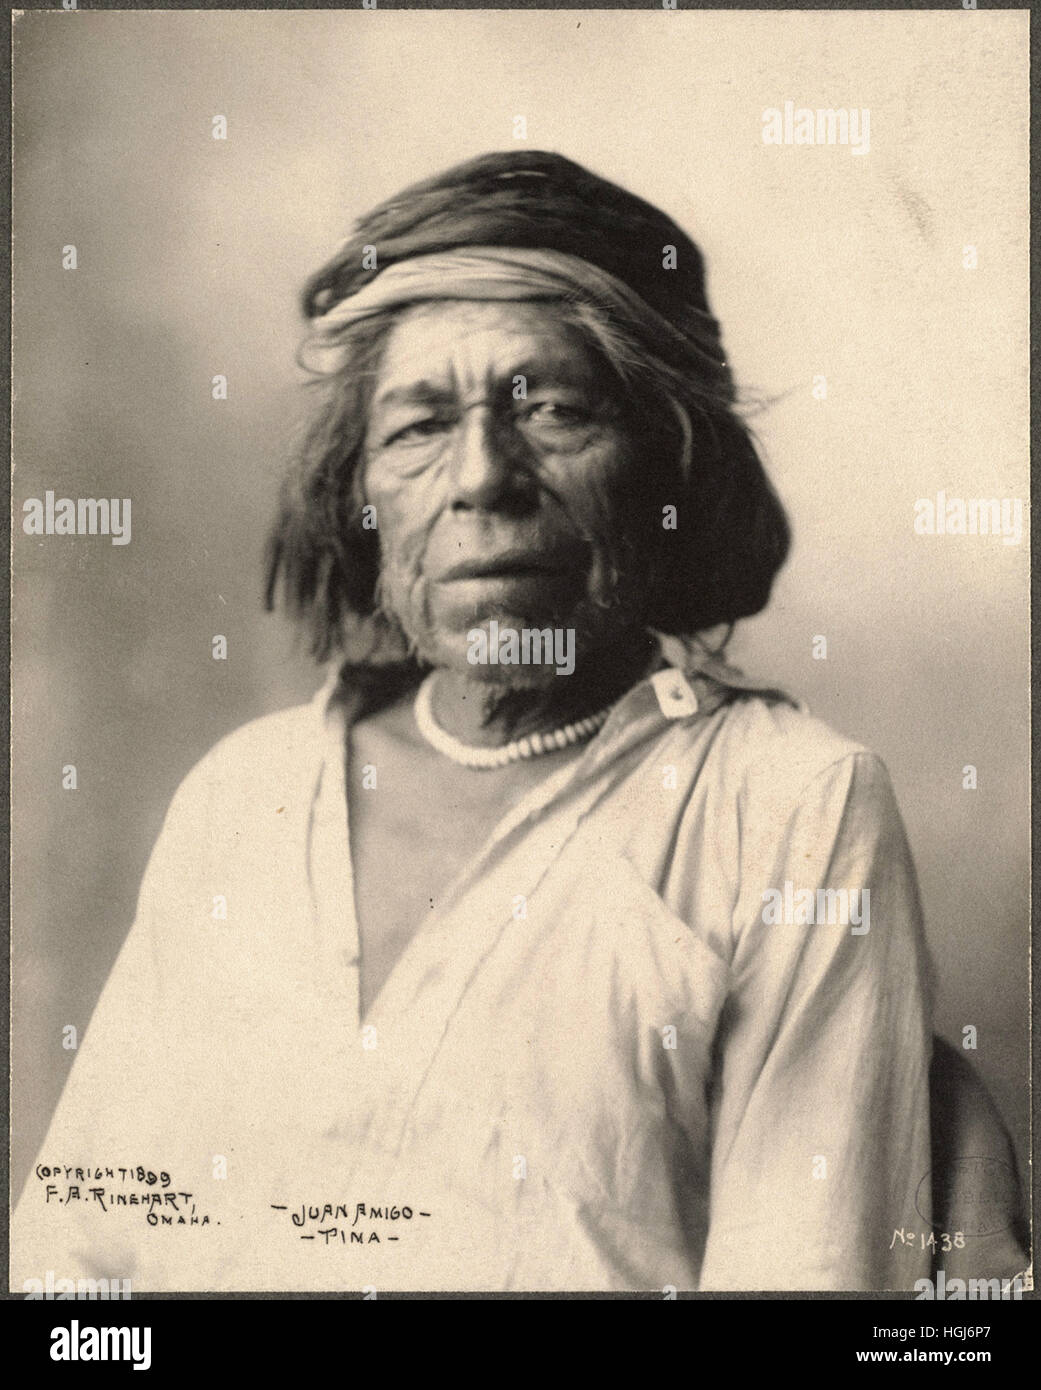 Juan Amigo, Pima - 1898 Indian Congress - Foto : Frank A. Rinehart Foto de stock